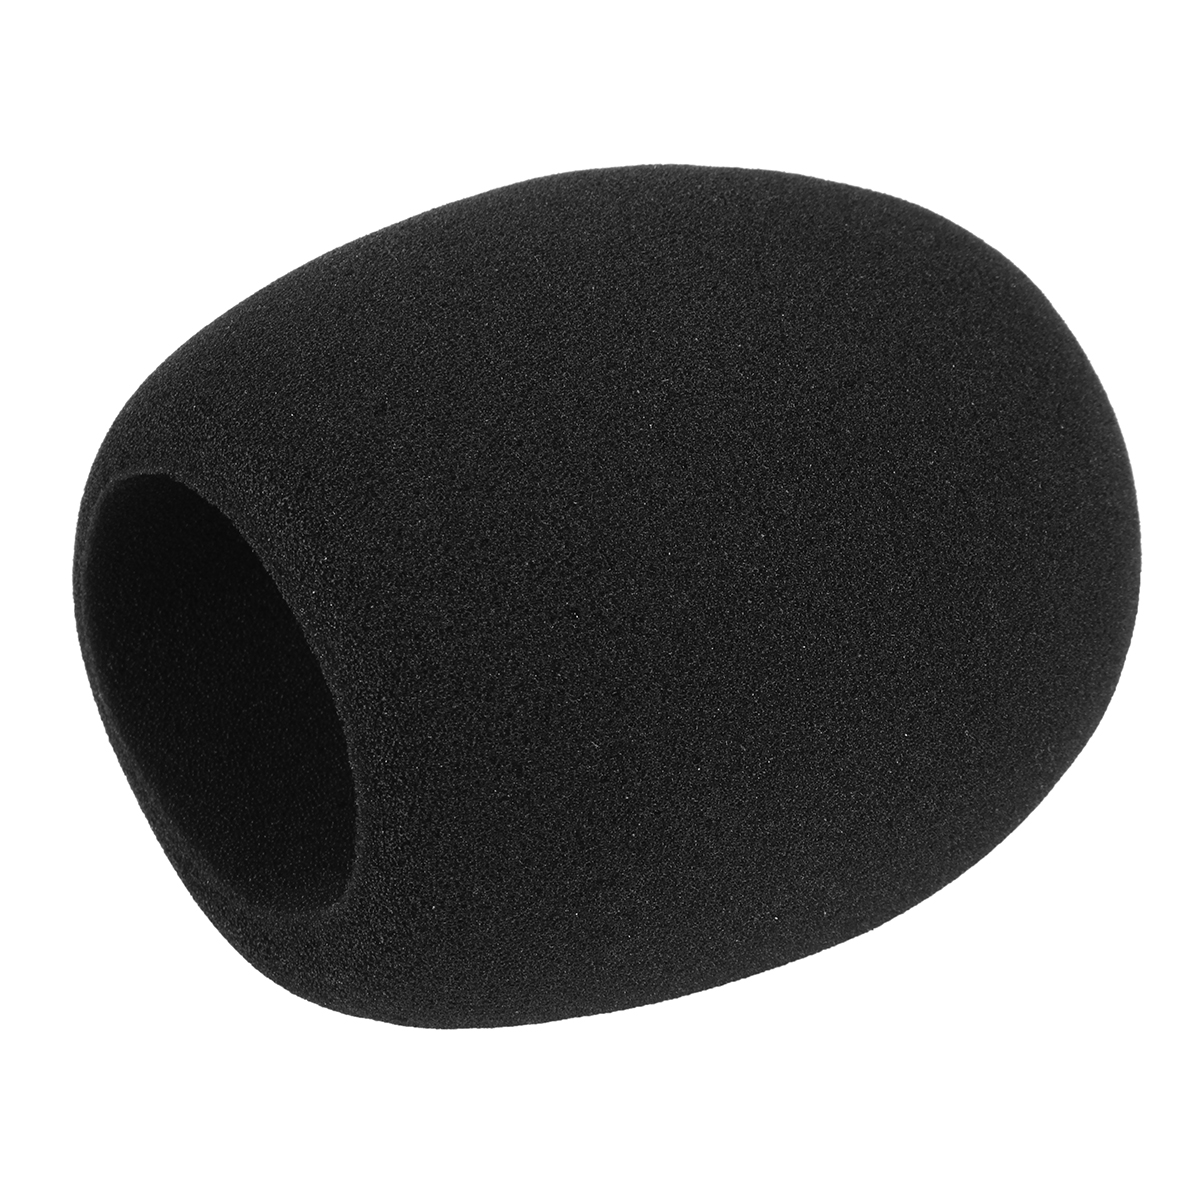 Microphone-Sponge-Foam-Mic-Pop-Filter-for-Blue-Yeti-Condenser-Voice-USB-Pro-Microphone-1289684